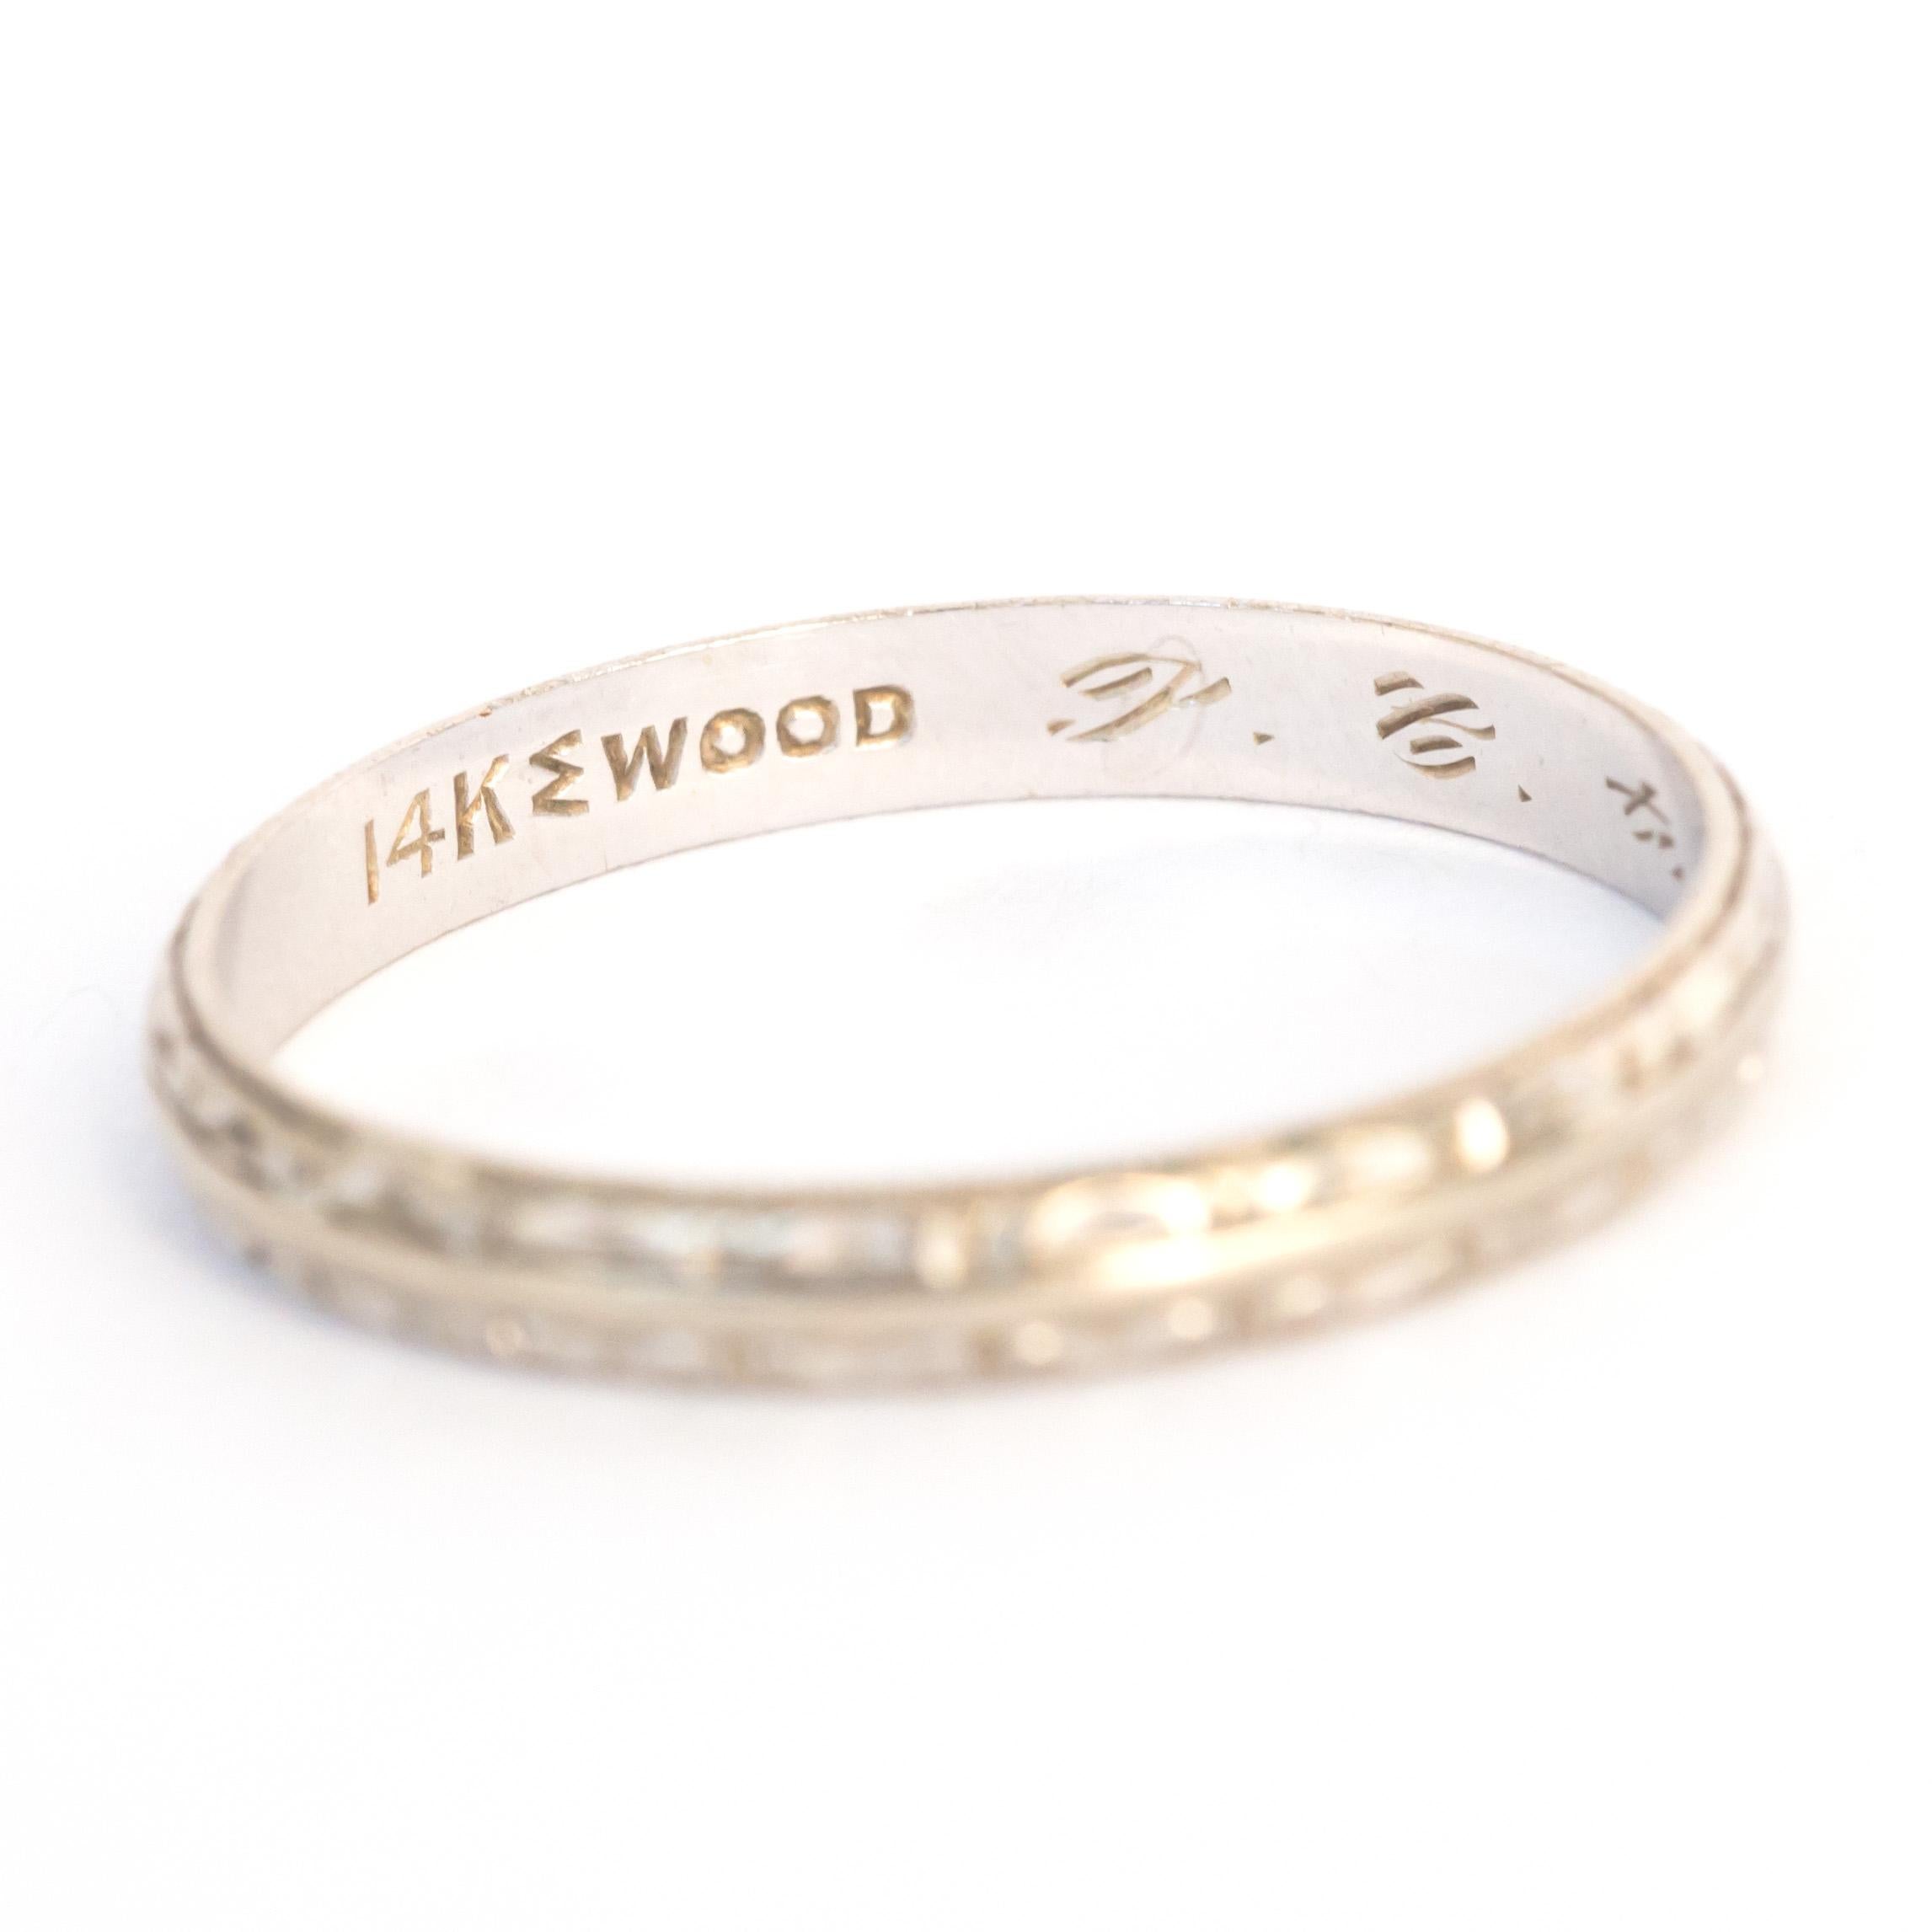 Ring Size: 6
Metal Type: 14k Karat White Gold 
Weight: 1.3 grams


Finger to Top of Stone Measurement: 1.12mm
Width: 2.48mm
